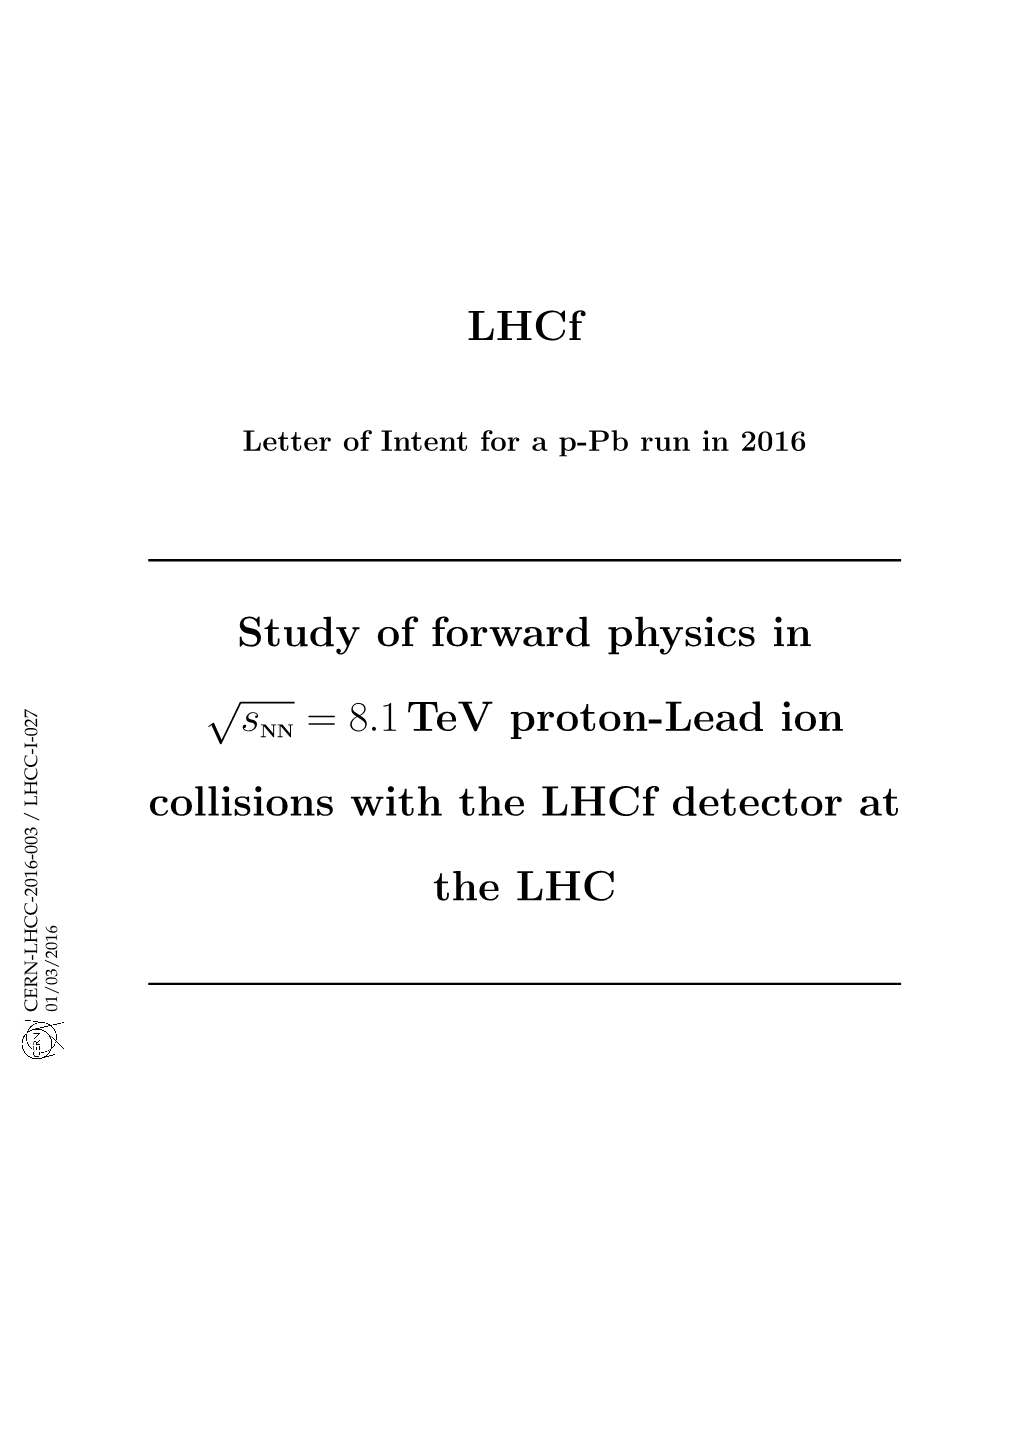 Lhcf Study of Forward Physics in /Snn = 8.1Tev Proton-Lead Ion Collisions